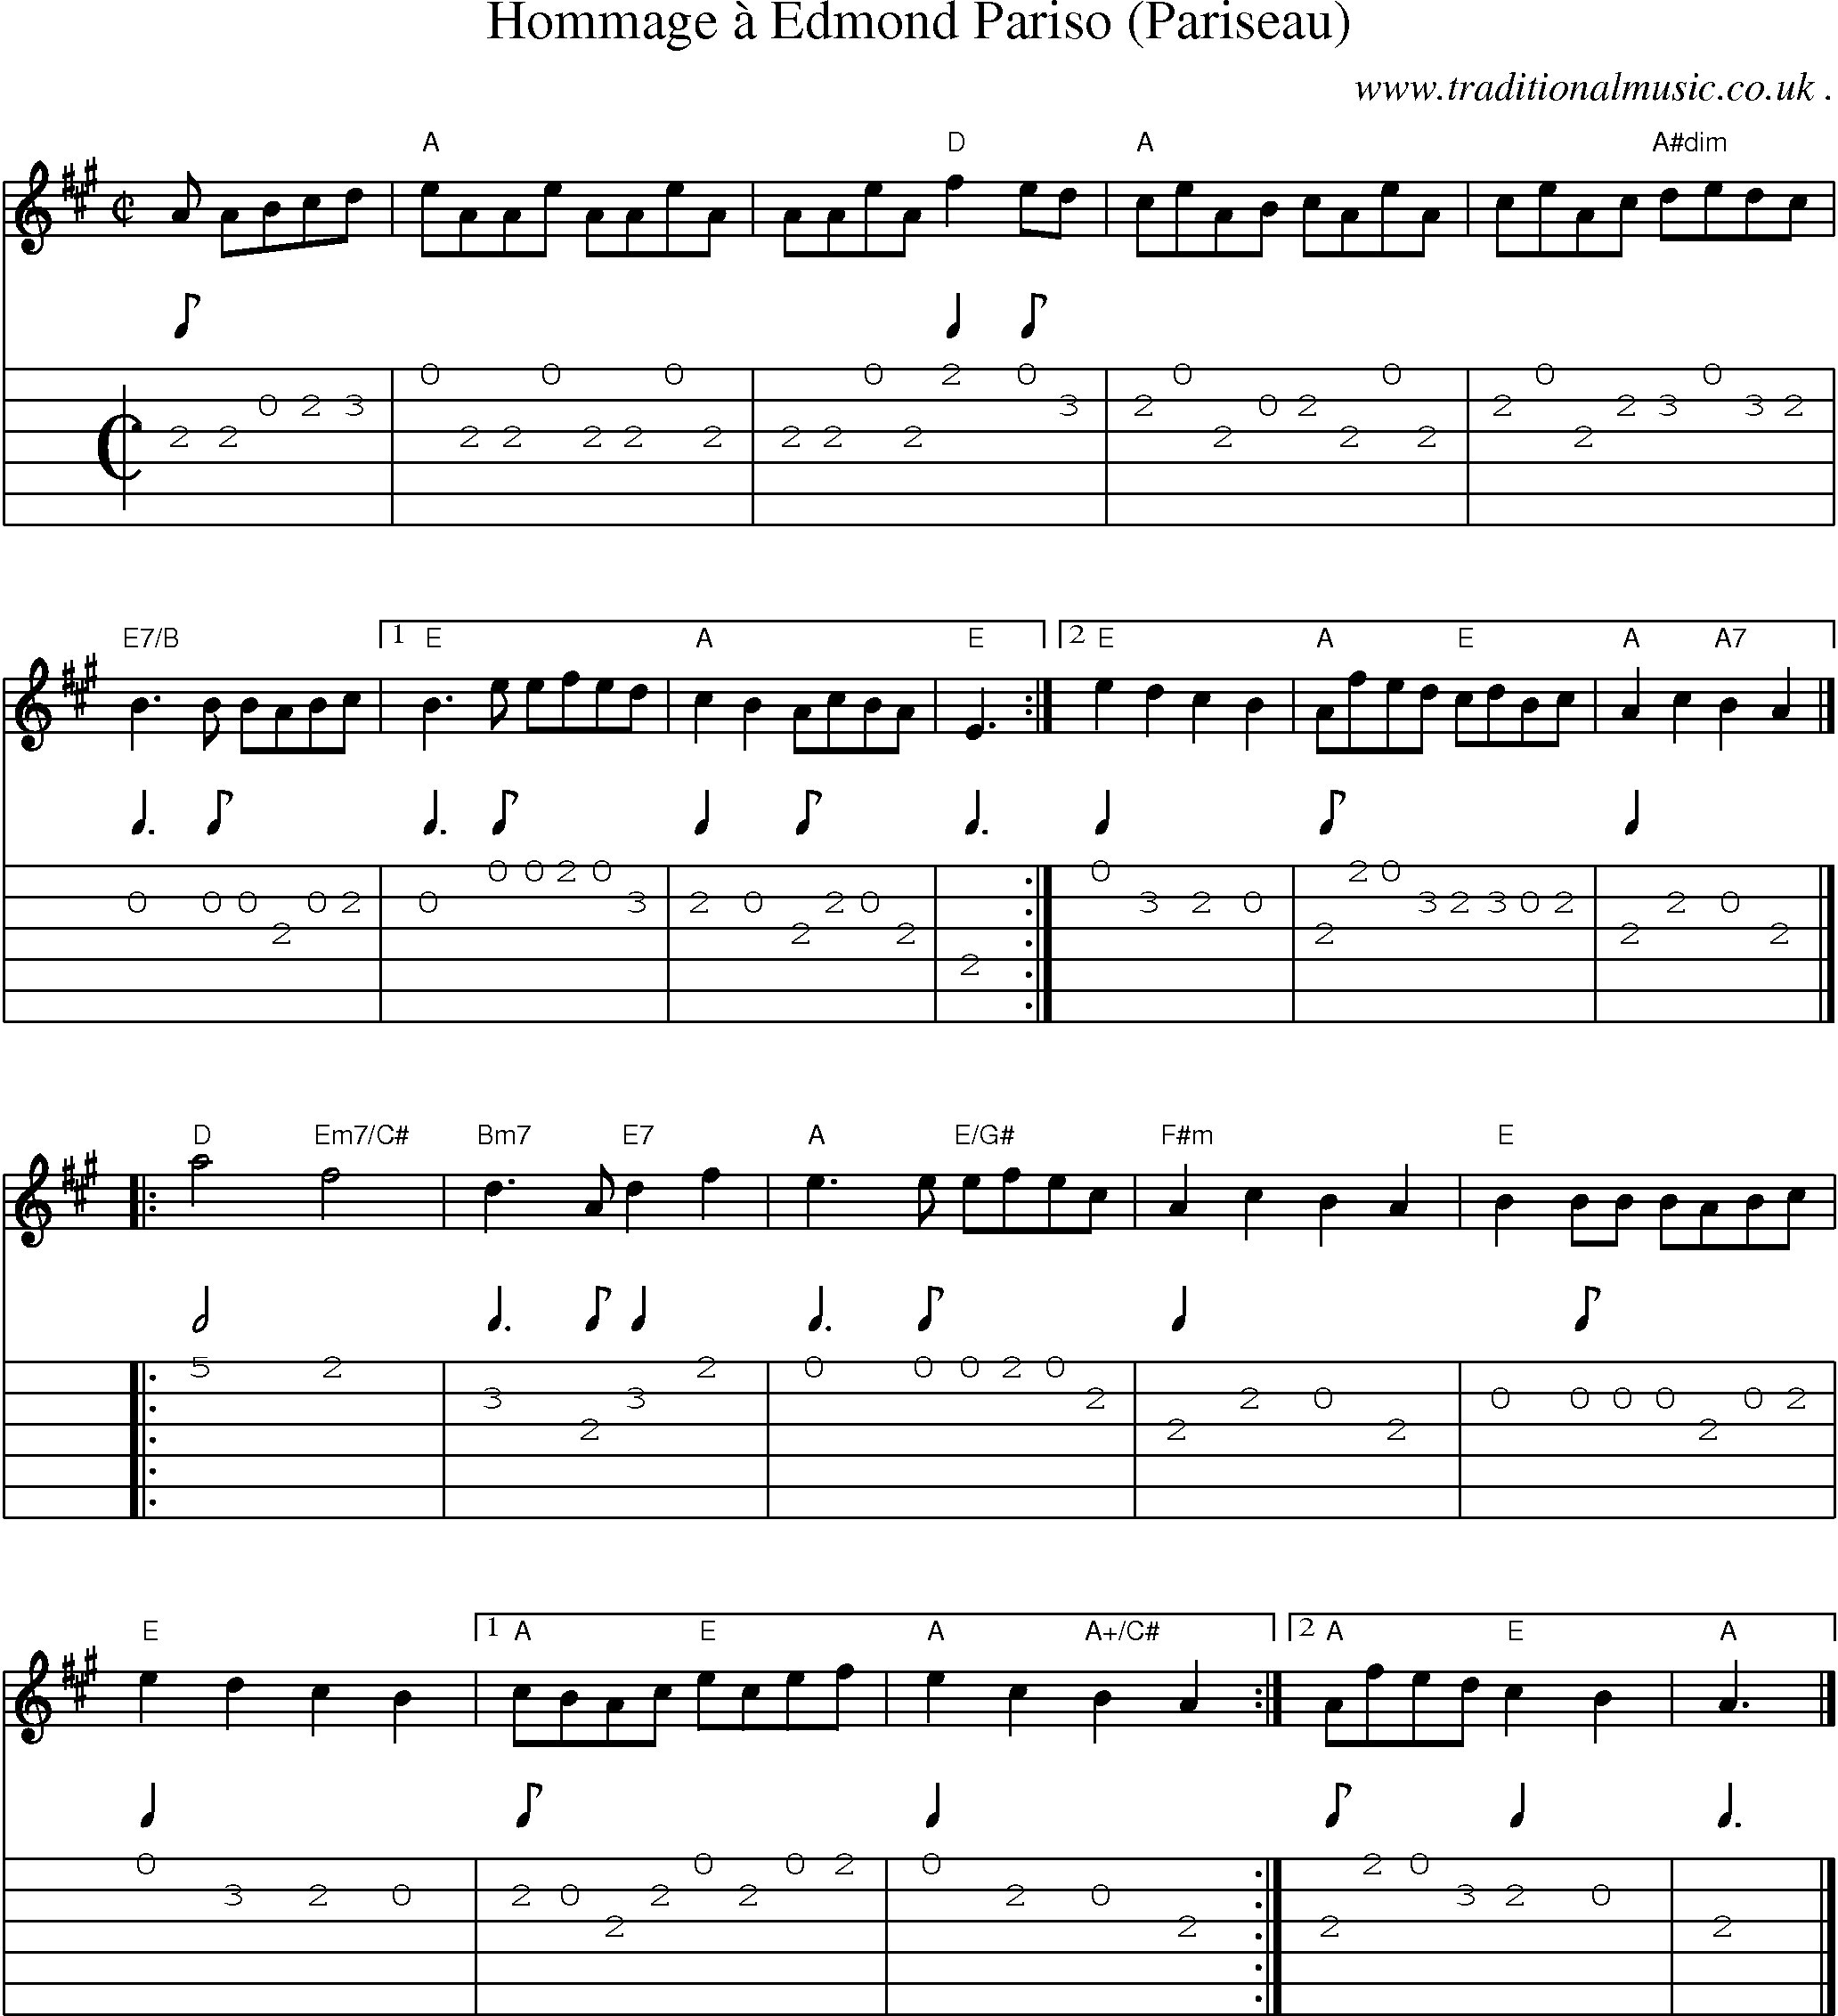 Sheet-music  score, Chords and Guitar Tabs for Hommage A Edmond Pariso Pariseau